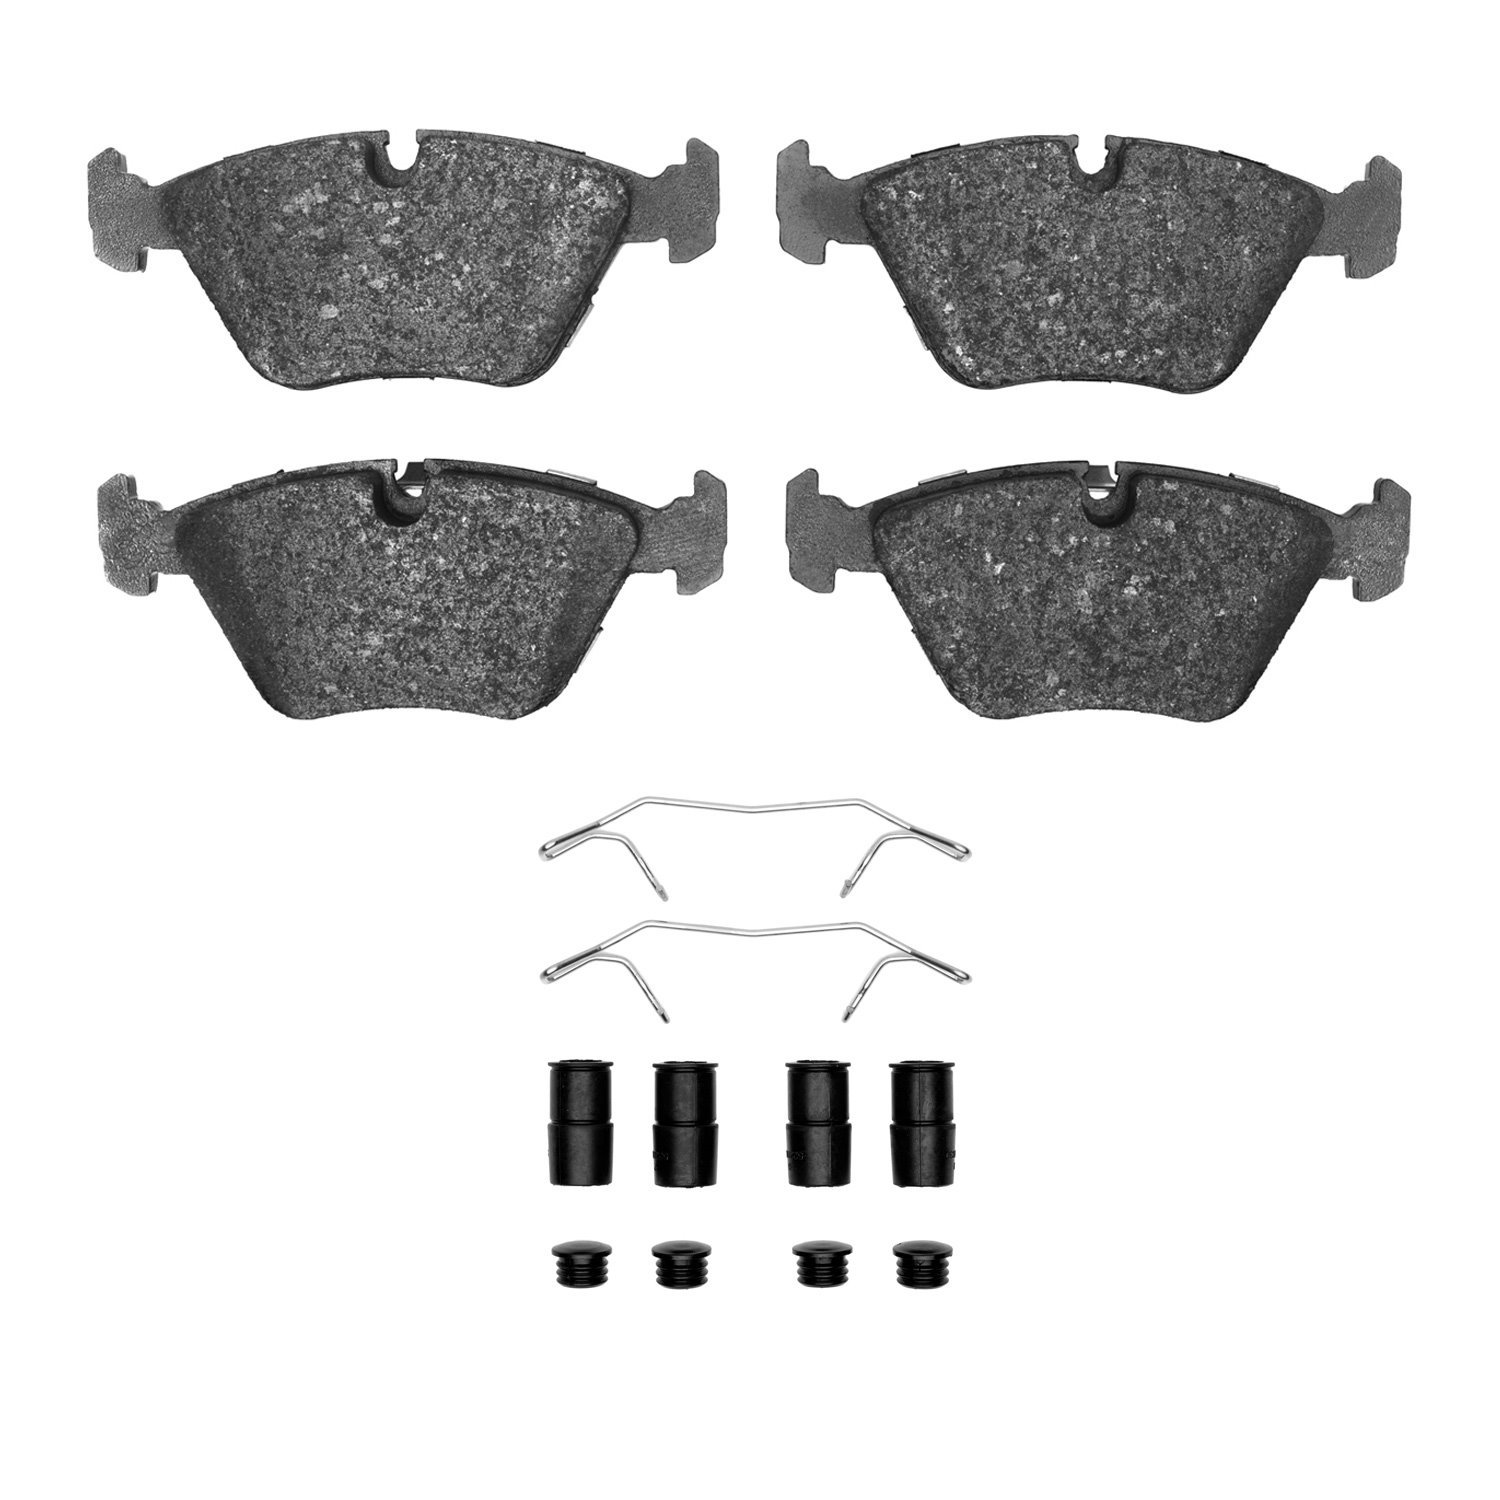 1551-0394-11 5000 Advanced Low-Metallic Brake Pads & Hardware Kit, 1989-2006 Multiple Makes/Models, Position: Front